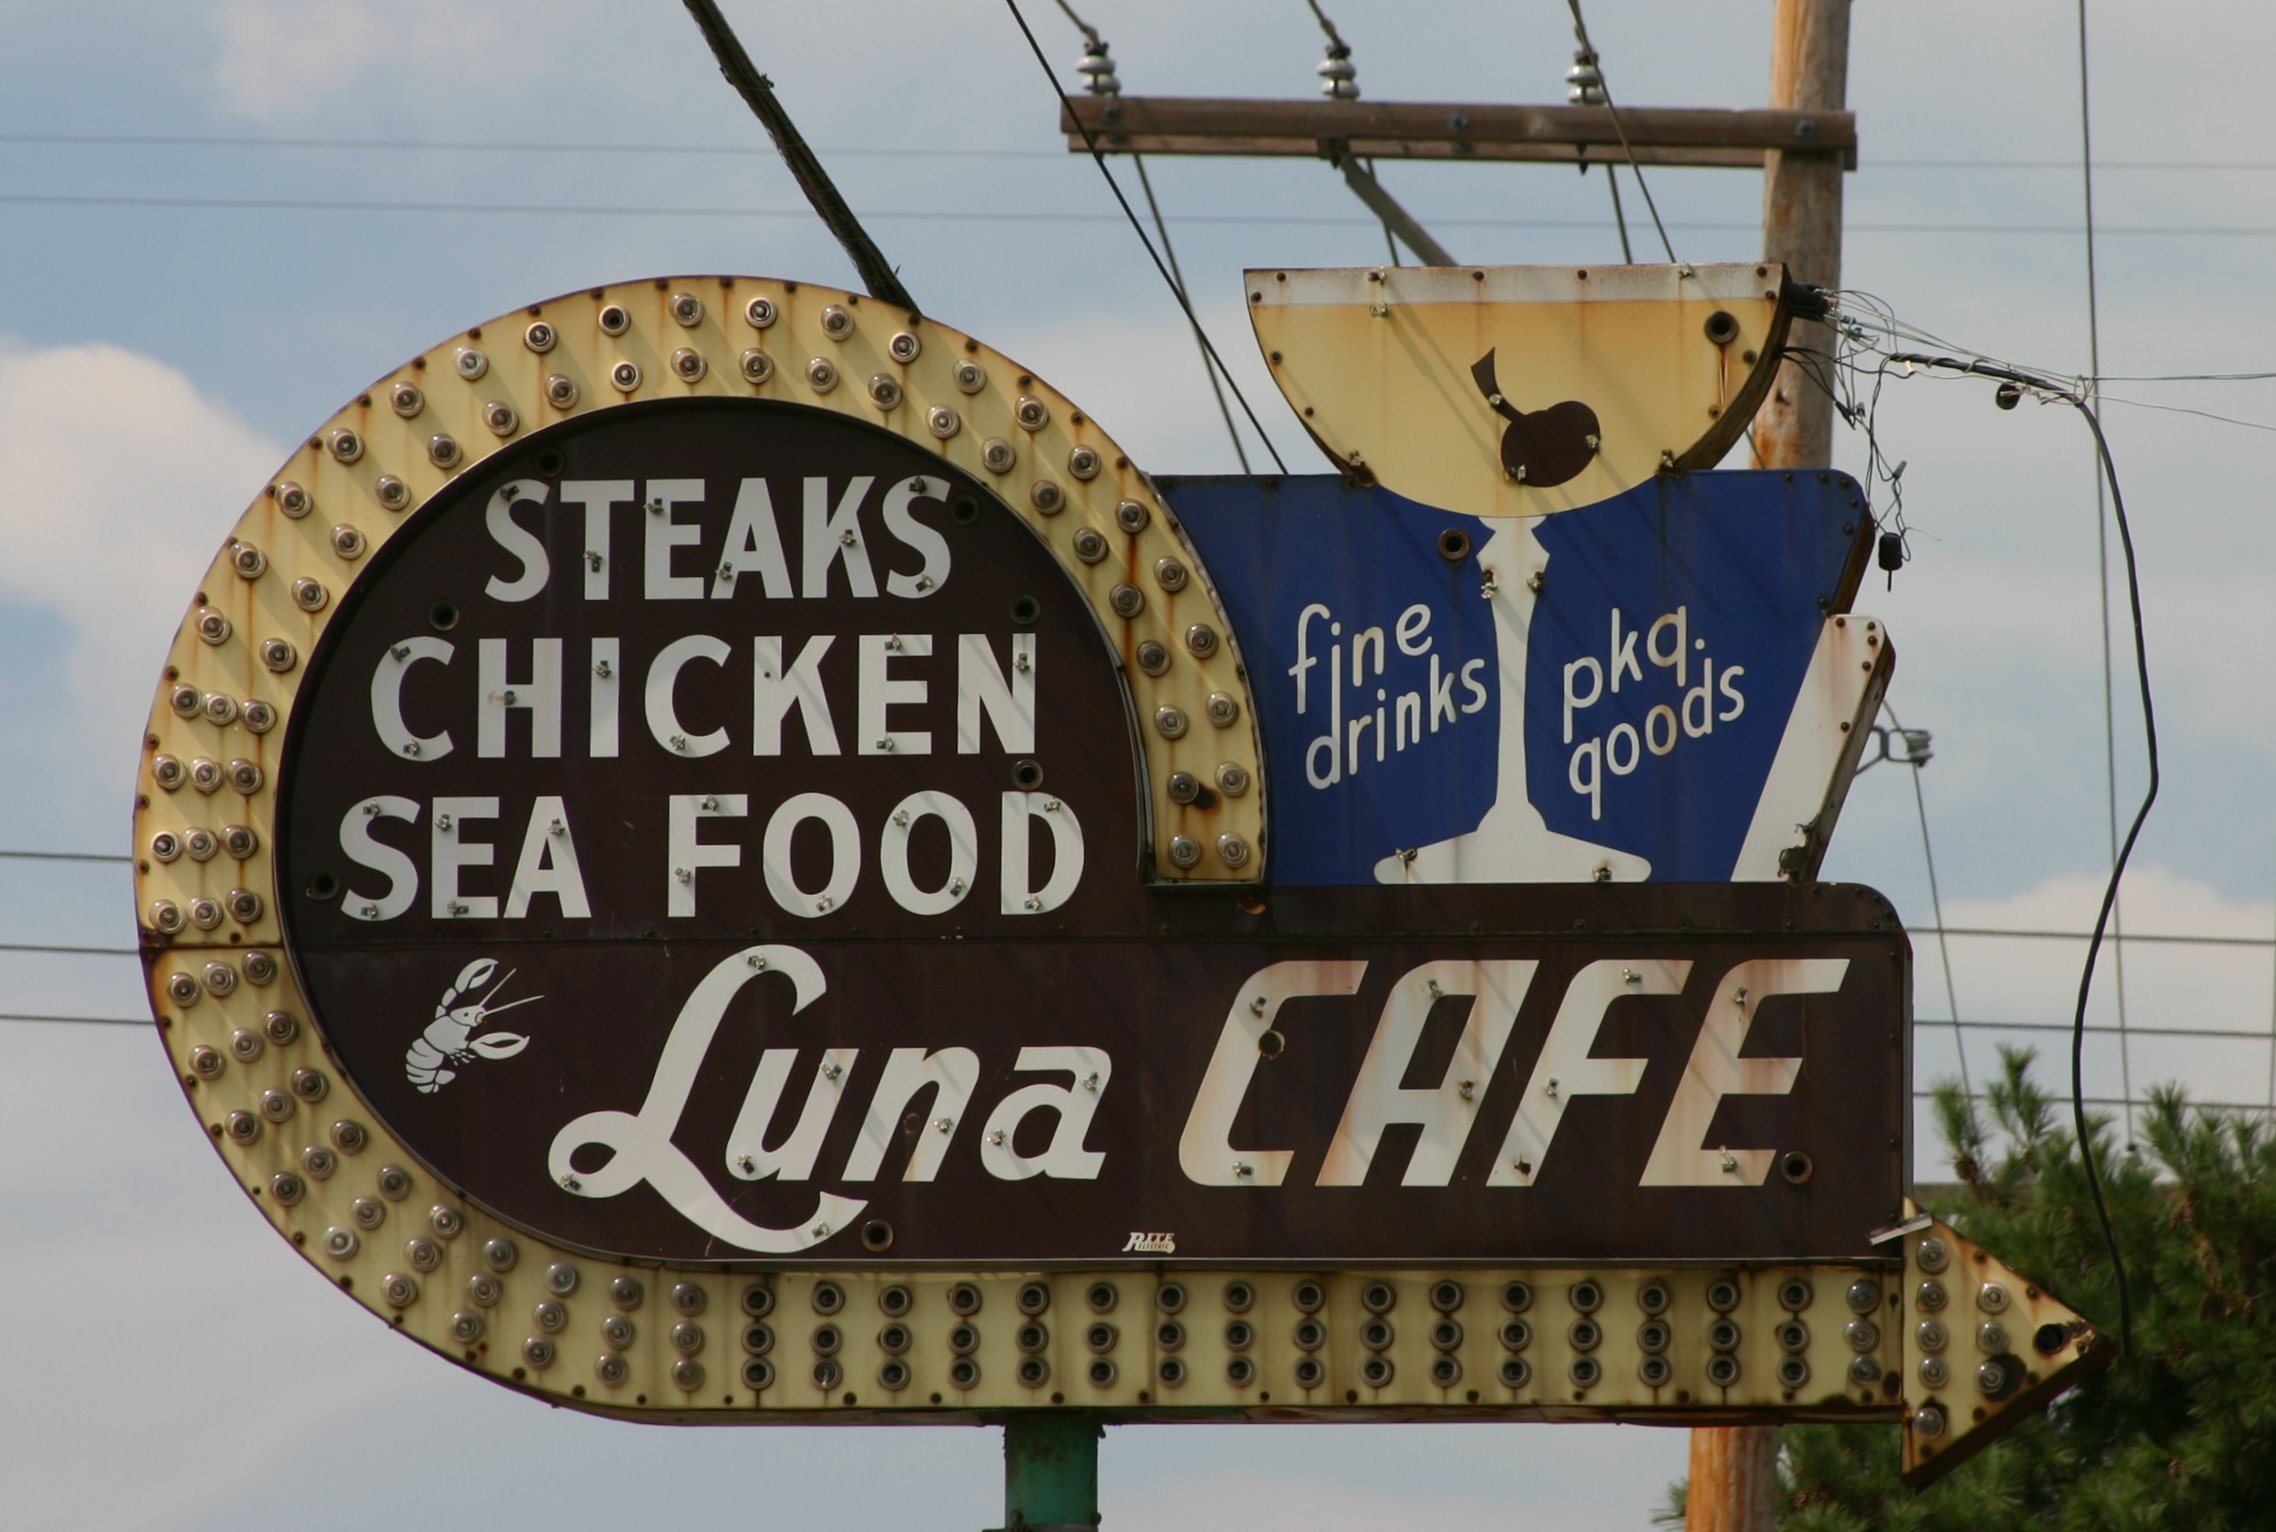 Luna Cafe - 201 East Chain of Rocks Road, Granite City, Illinois U.S.A. - August 22, 2010